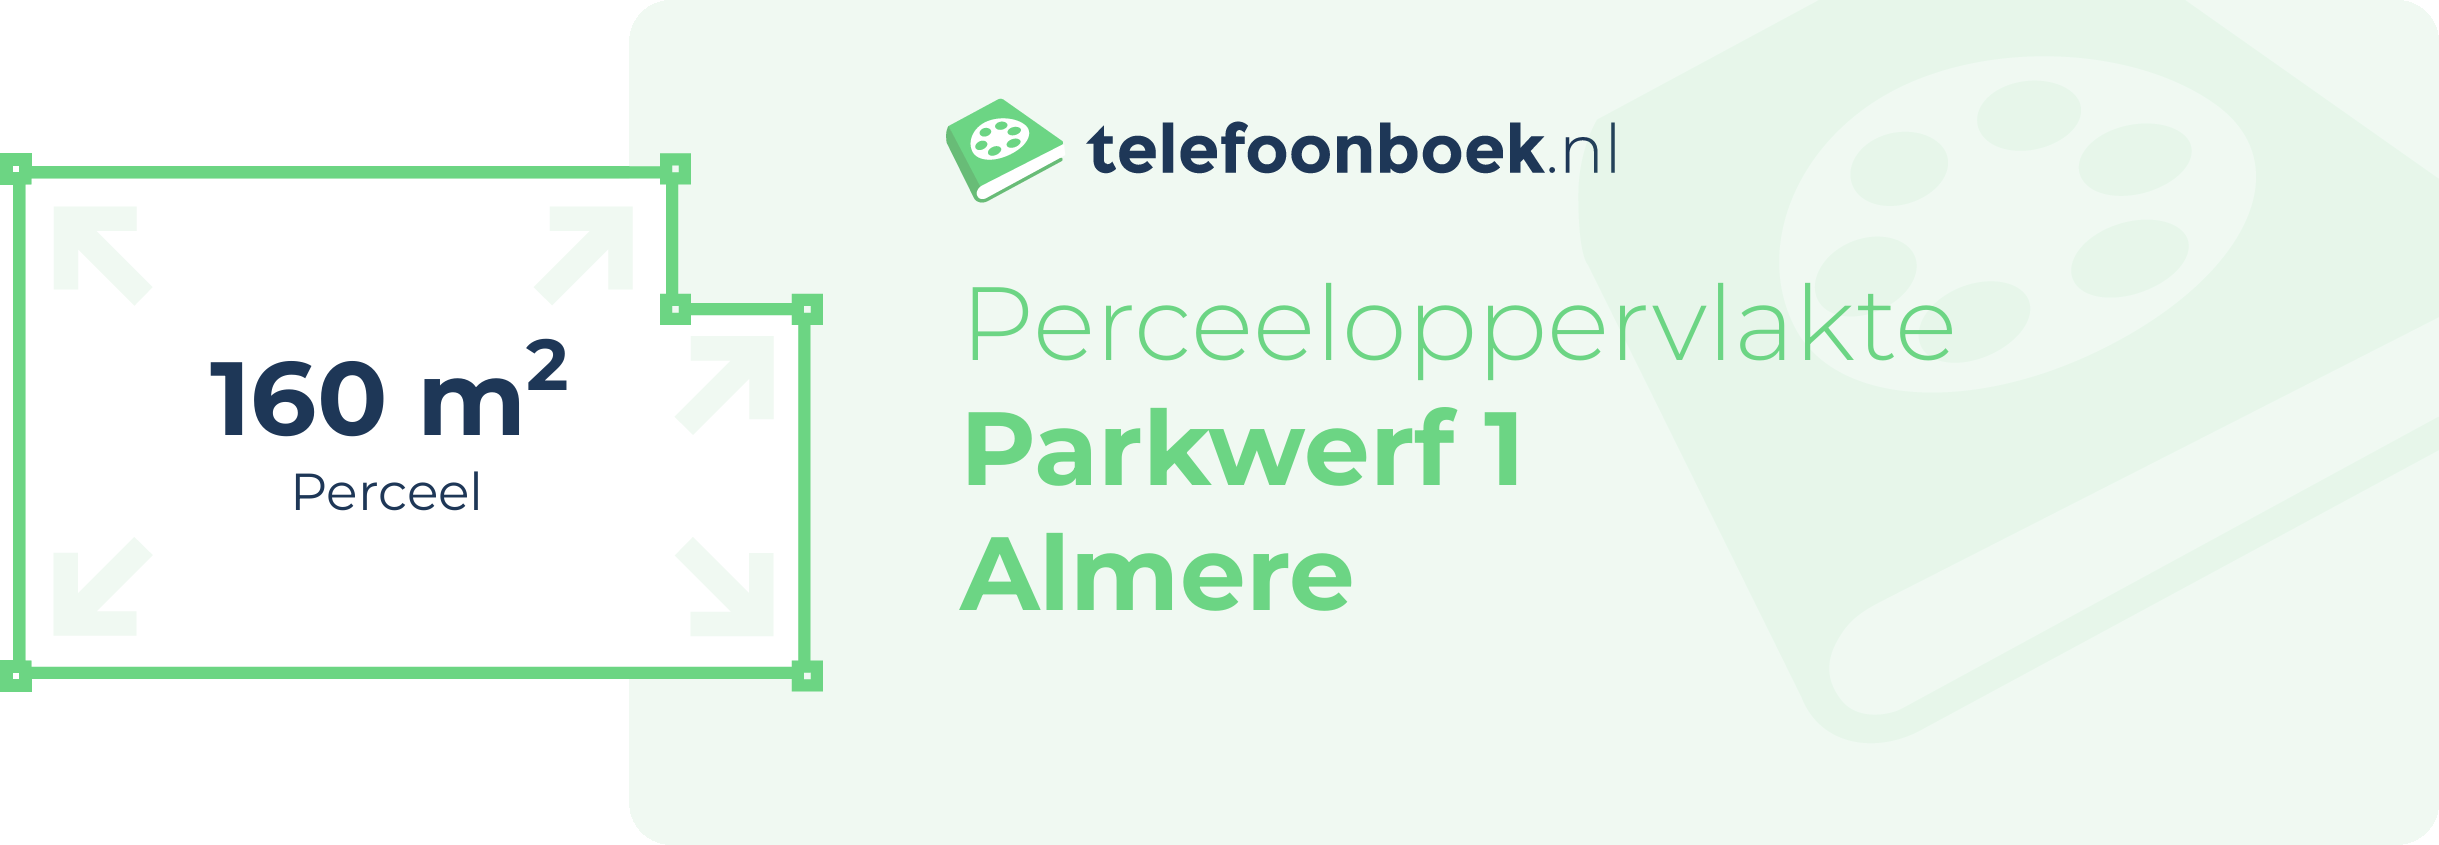 Perceeloppervlakte Parkwerf 1 Almere